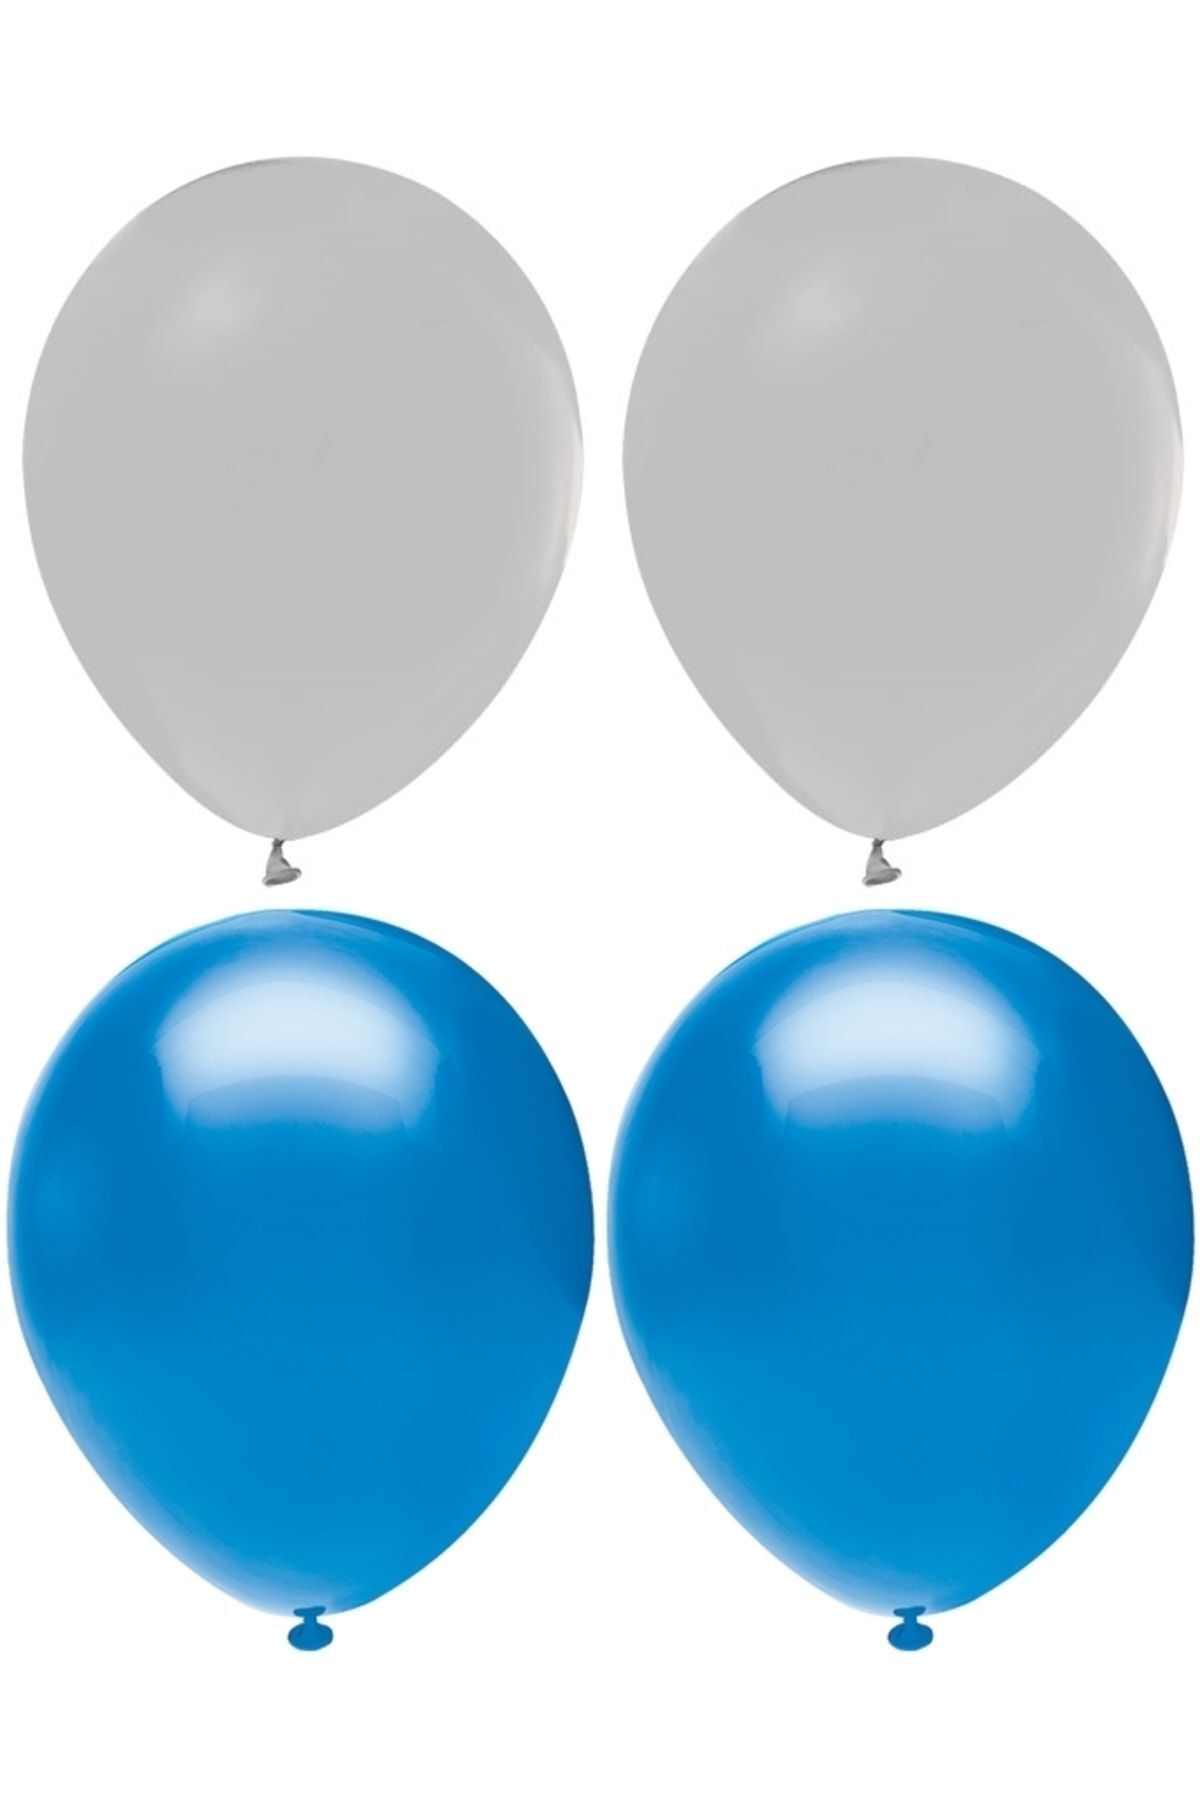 HKNYS Gri Koyu Mavi Karışık Lateks Pastel Balon 10 Adet